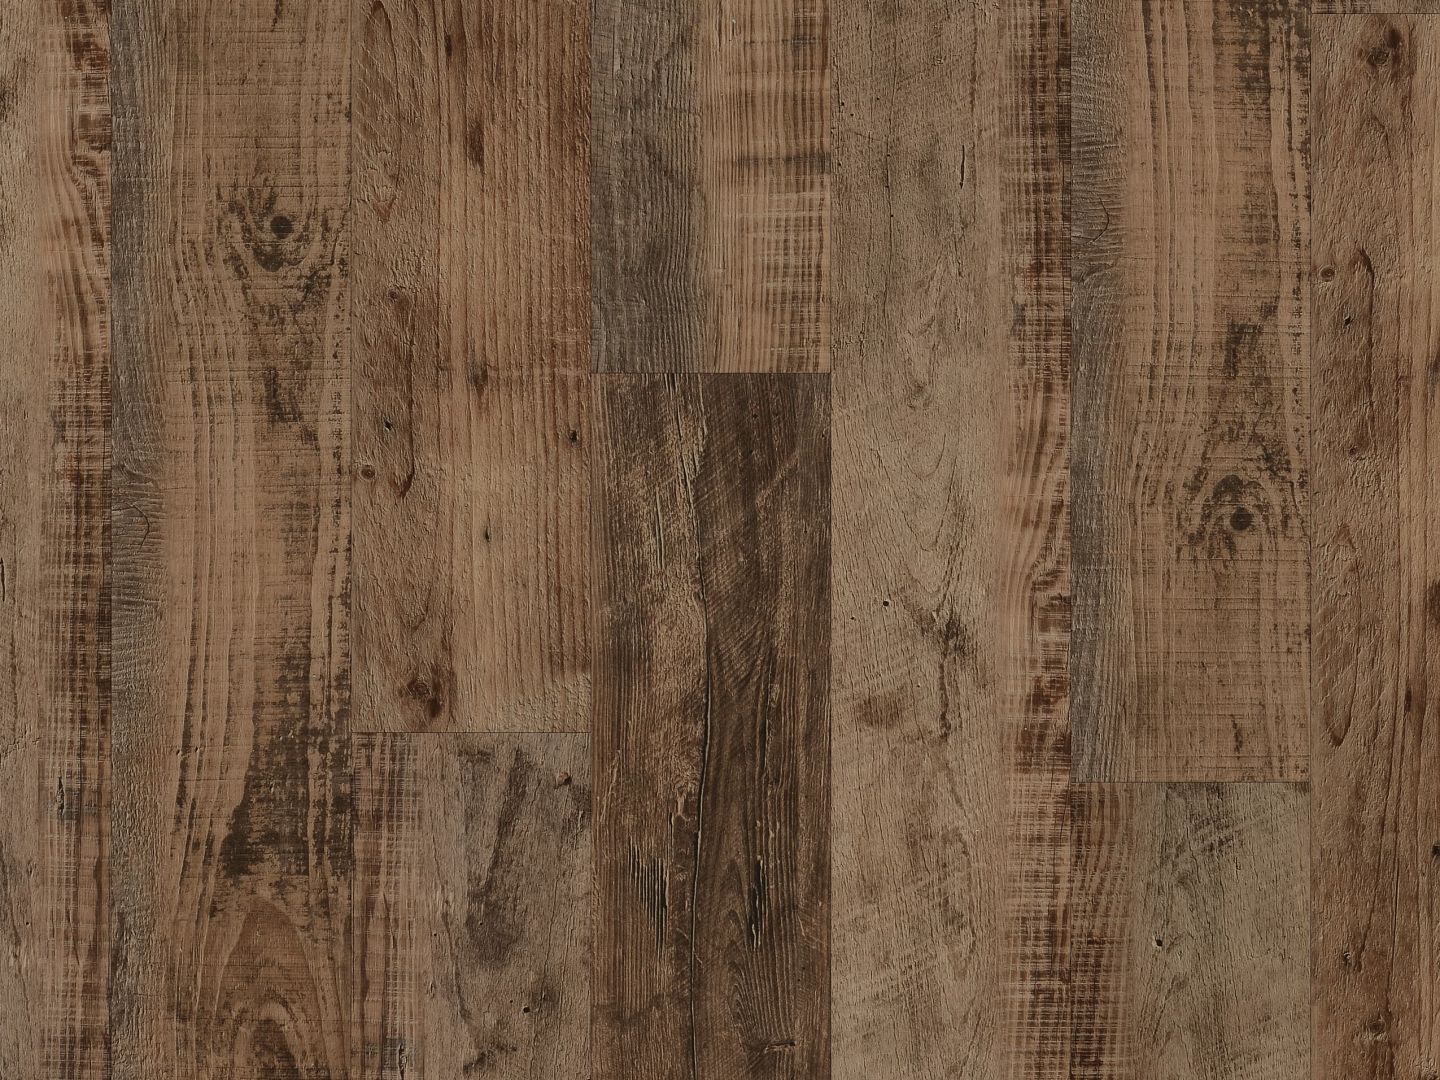 COREtec Pro Plus duxbury oak vv017-01012 Vinyl Plank Flooring | COREtec